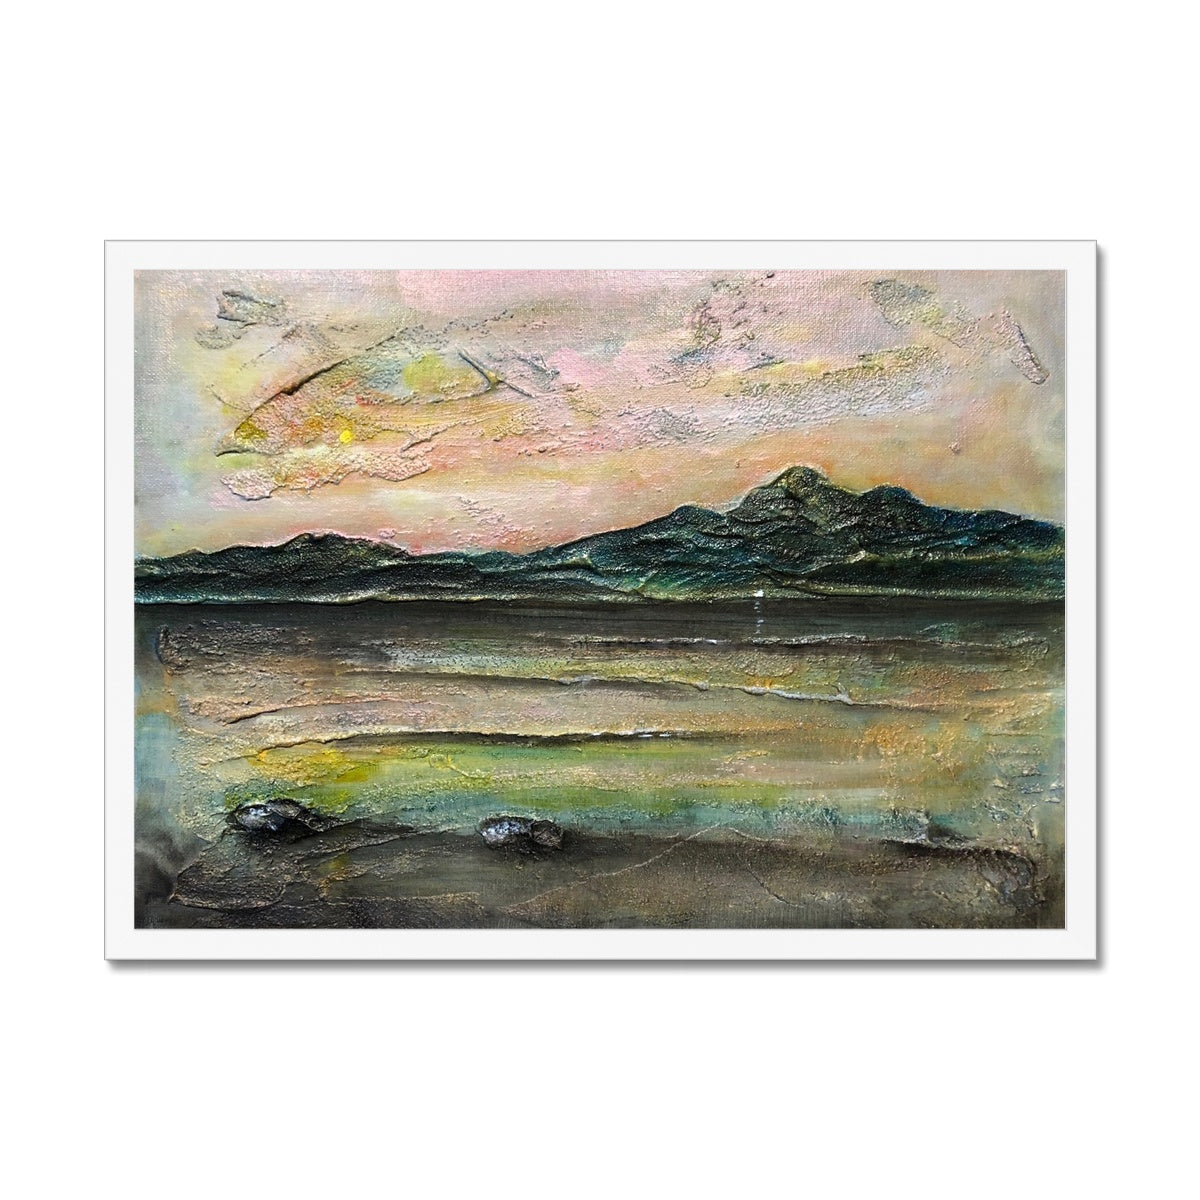 An Ethereal Loch Na Dal Skye Painting | Framed Prints From Scotland-Framed Prints-Scottish Lochs & Mountains Art Gallery-A2 Landscape-White Frame-Paintings, Prints, Homeware, Art Gifts From Scotland By Scottish Artist Kevin Hunter